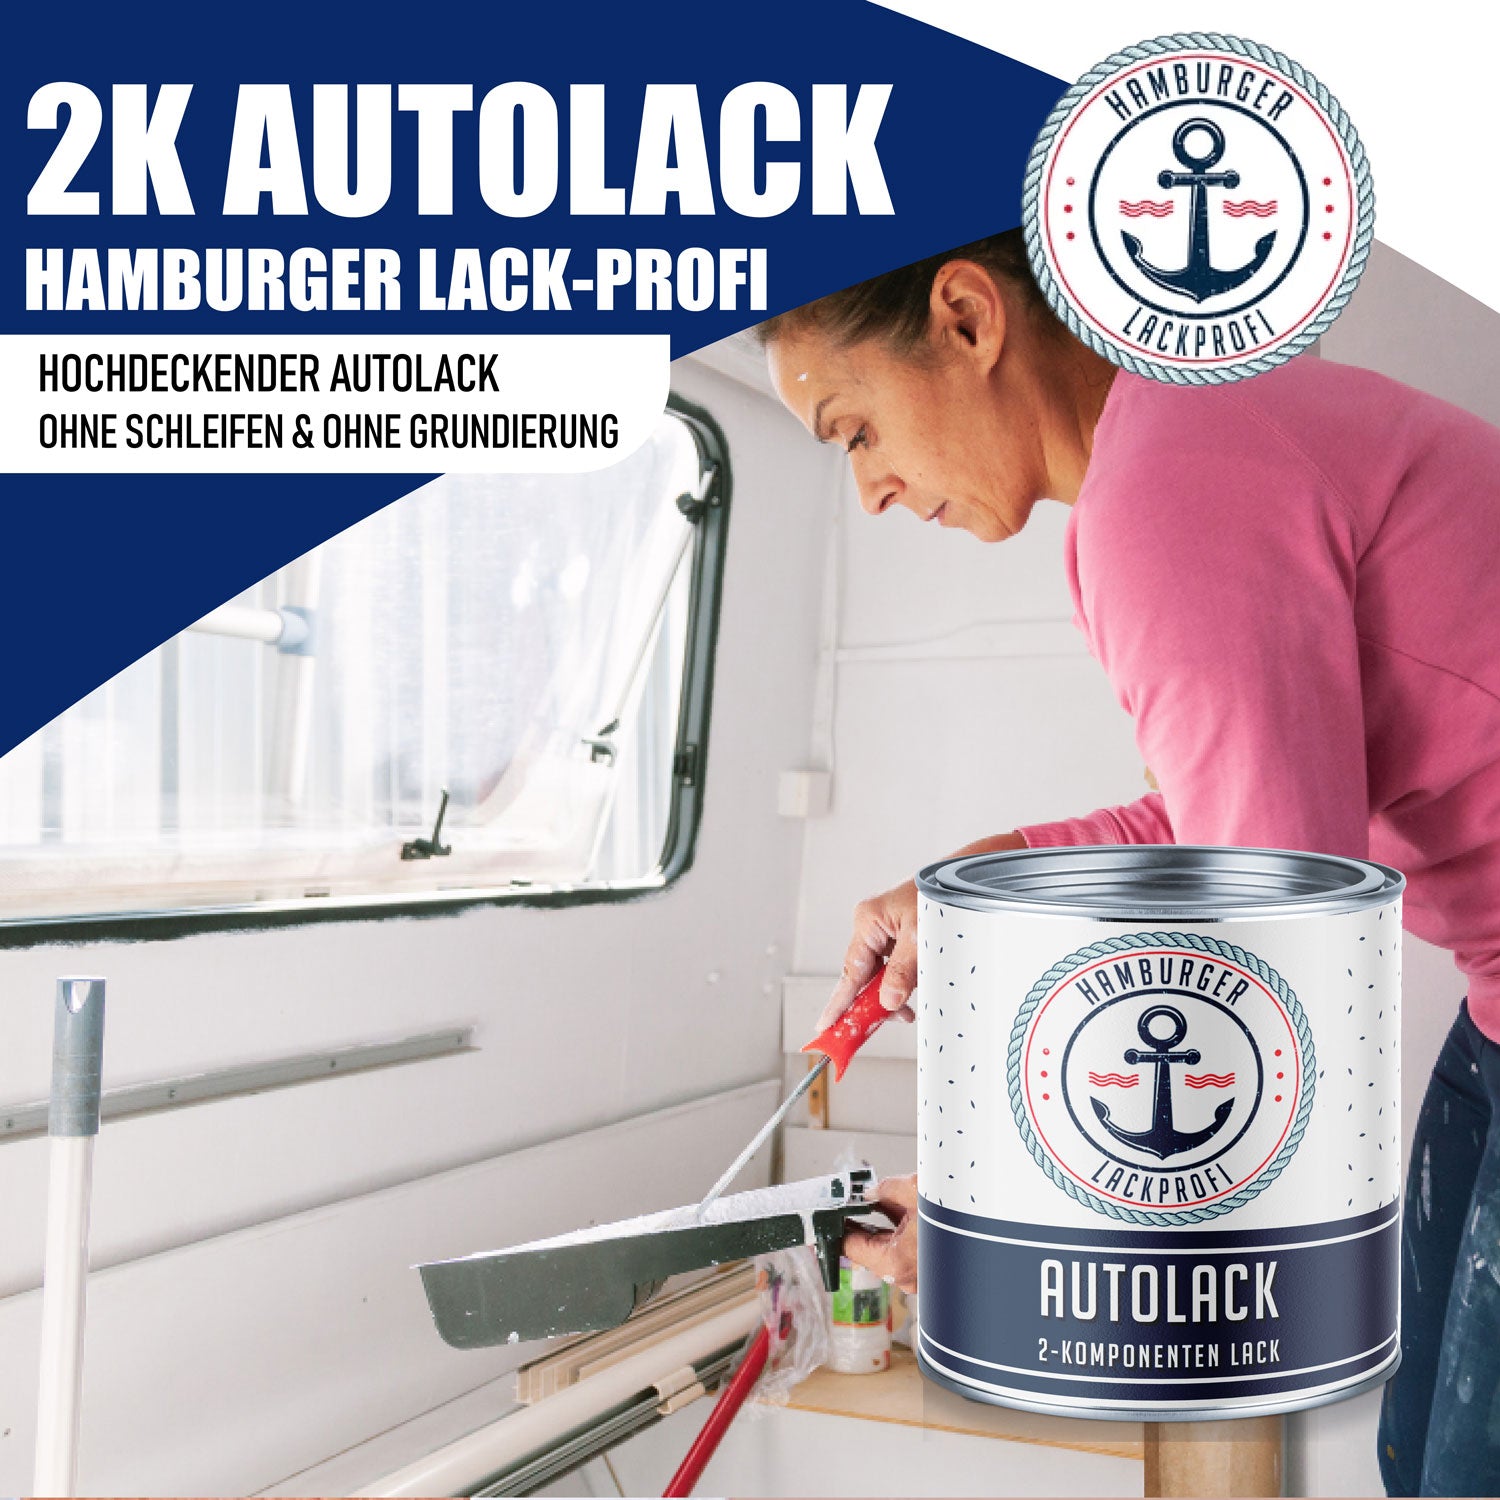 Hamburger Lack-Profi 2K Autolack in RAL 1005 Honiggelb mit Lackierset (X300) & Verdünnung (1 L) - 30% Sparangebot